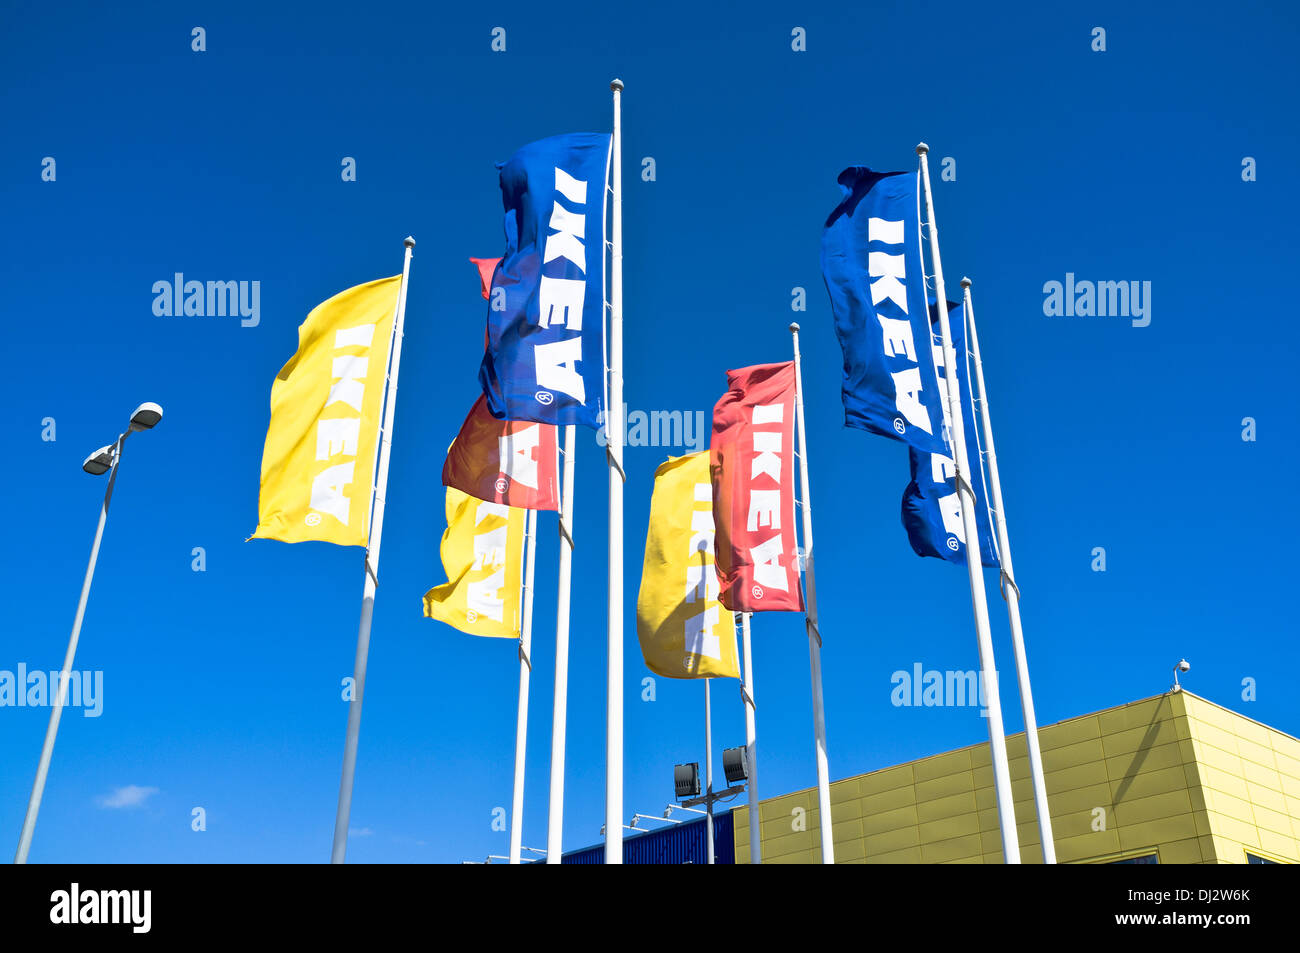 dh Ikea SUPERSTORE EUROPE Ikea flags Arrecife Lanzarote Spain spanish retail store exterior Stock Photo